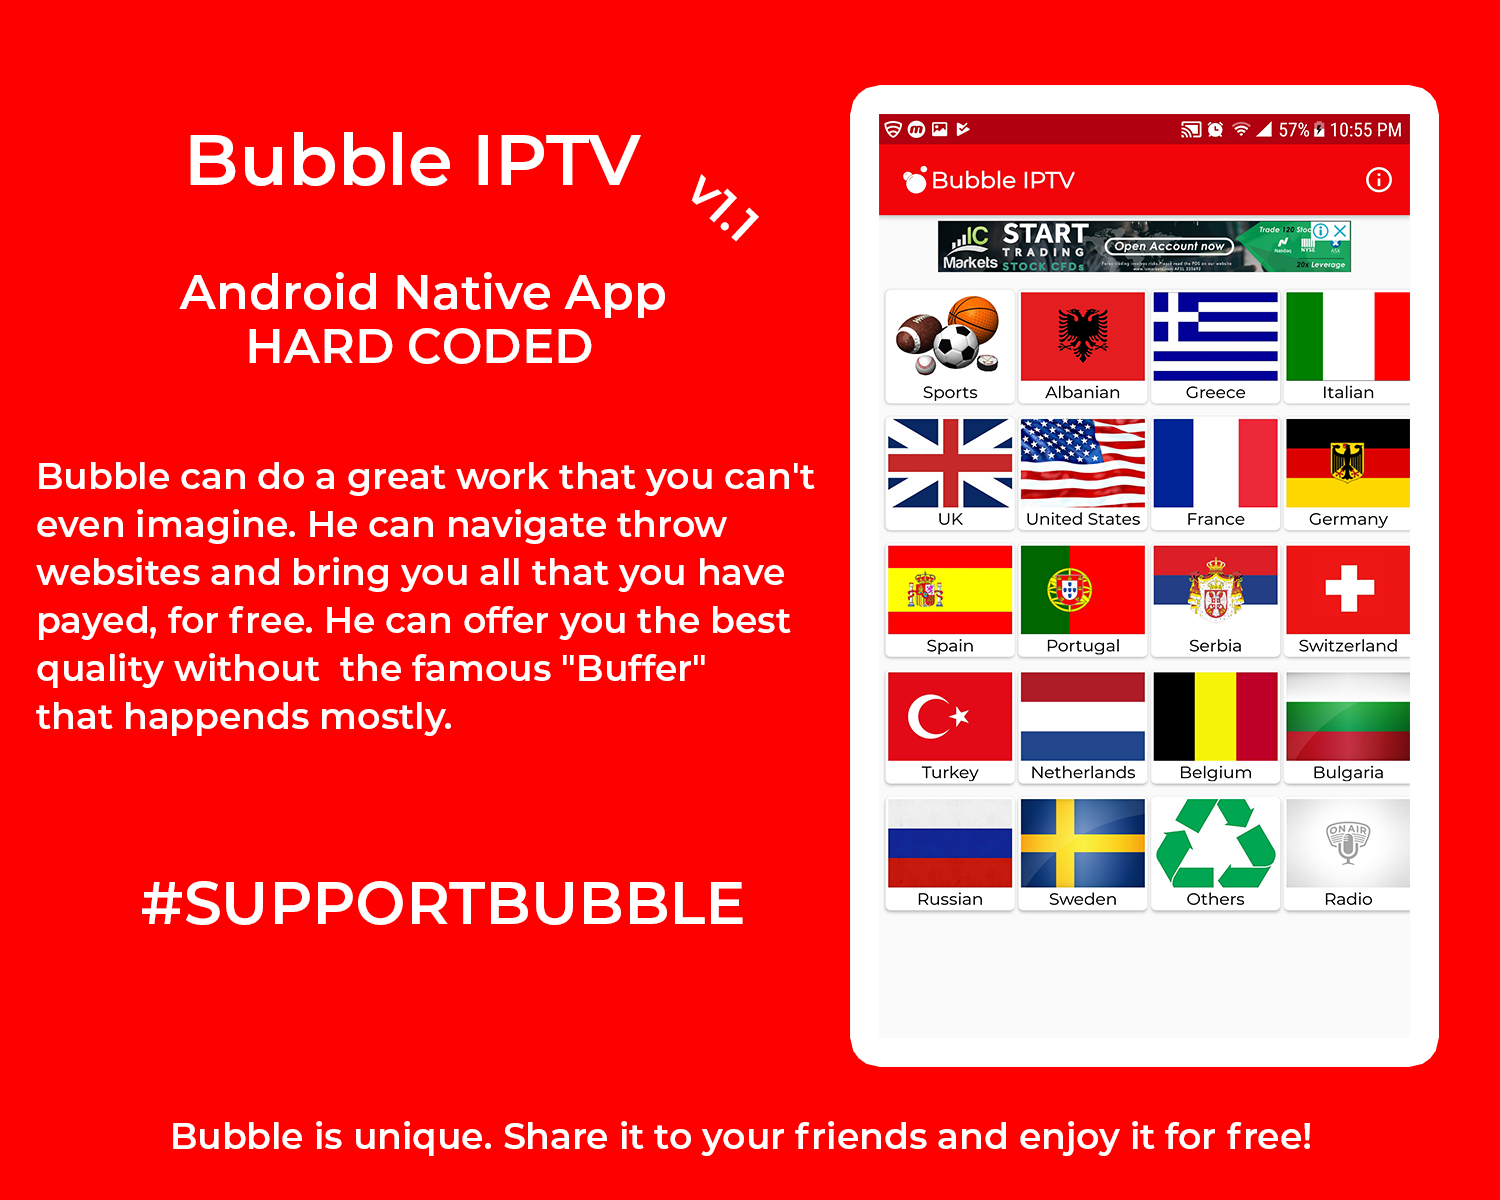 Bubble IPTV App - iHost.al - .AL Domain Registration, Web Hosting & Web Development